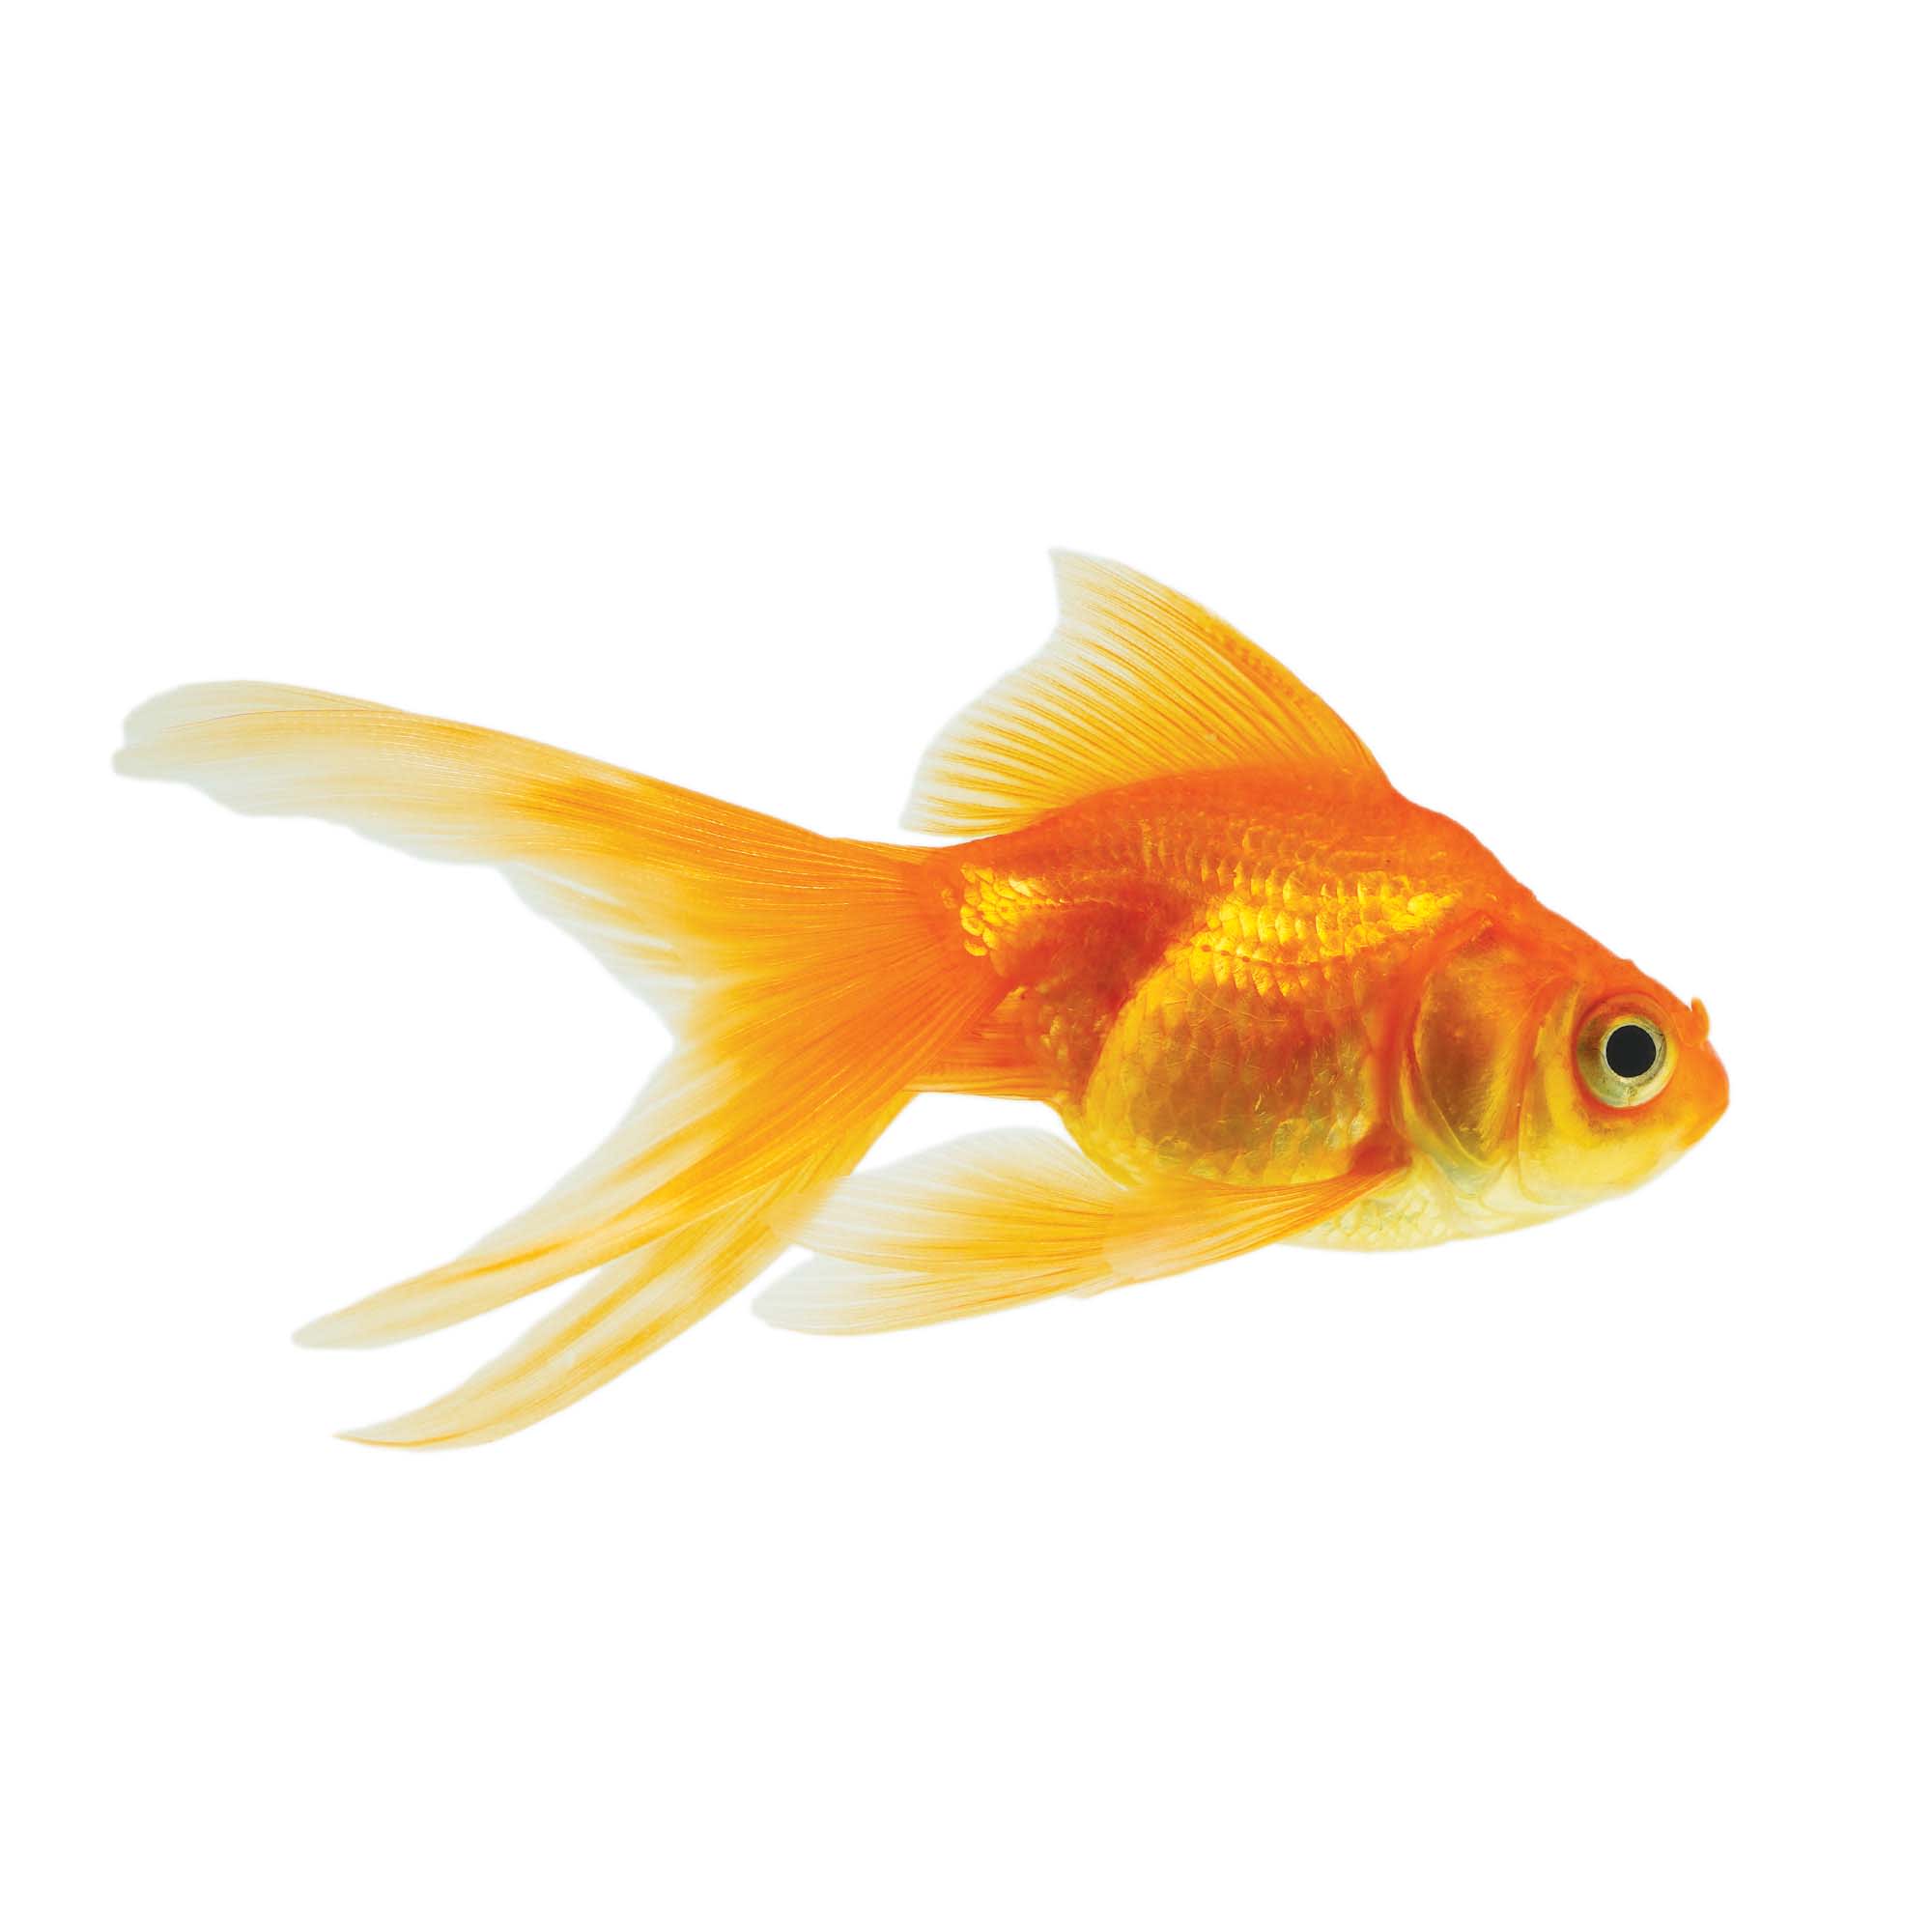 Red Ryukin Goldfish for Sale: Order Online